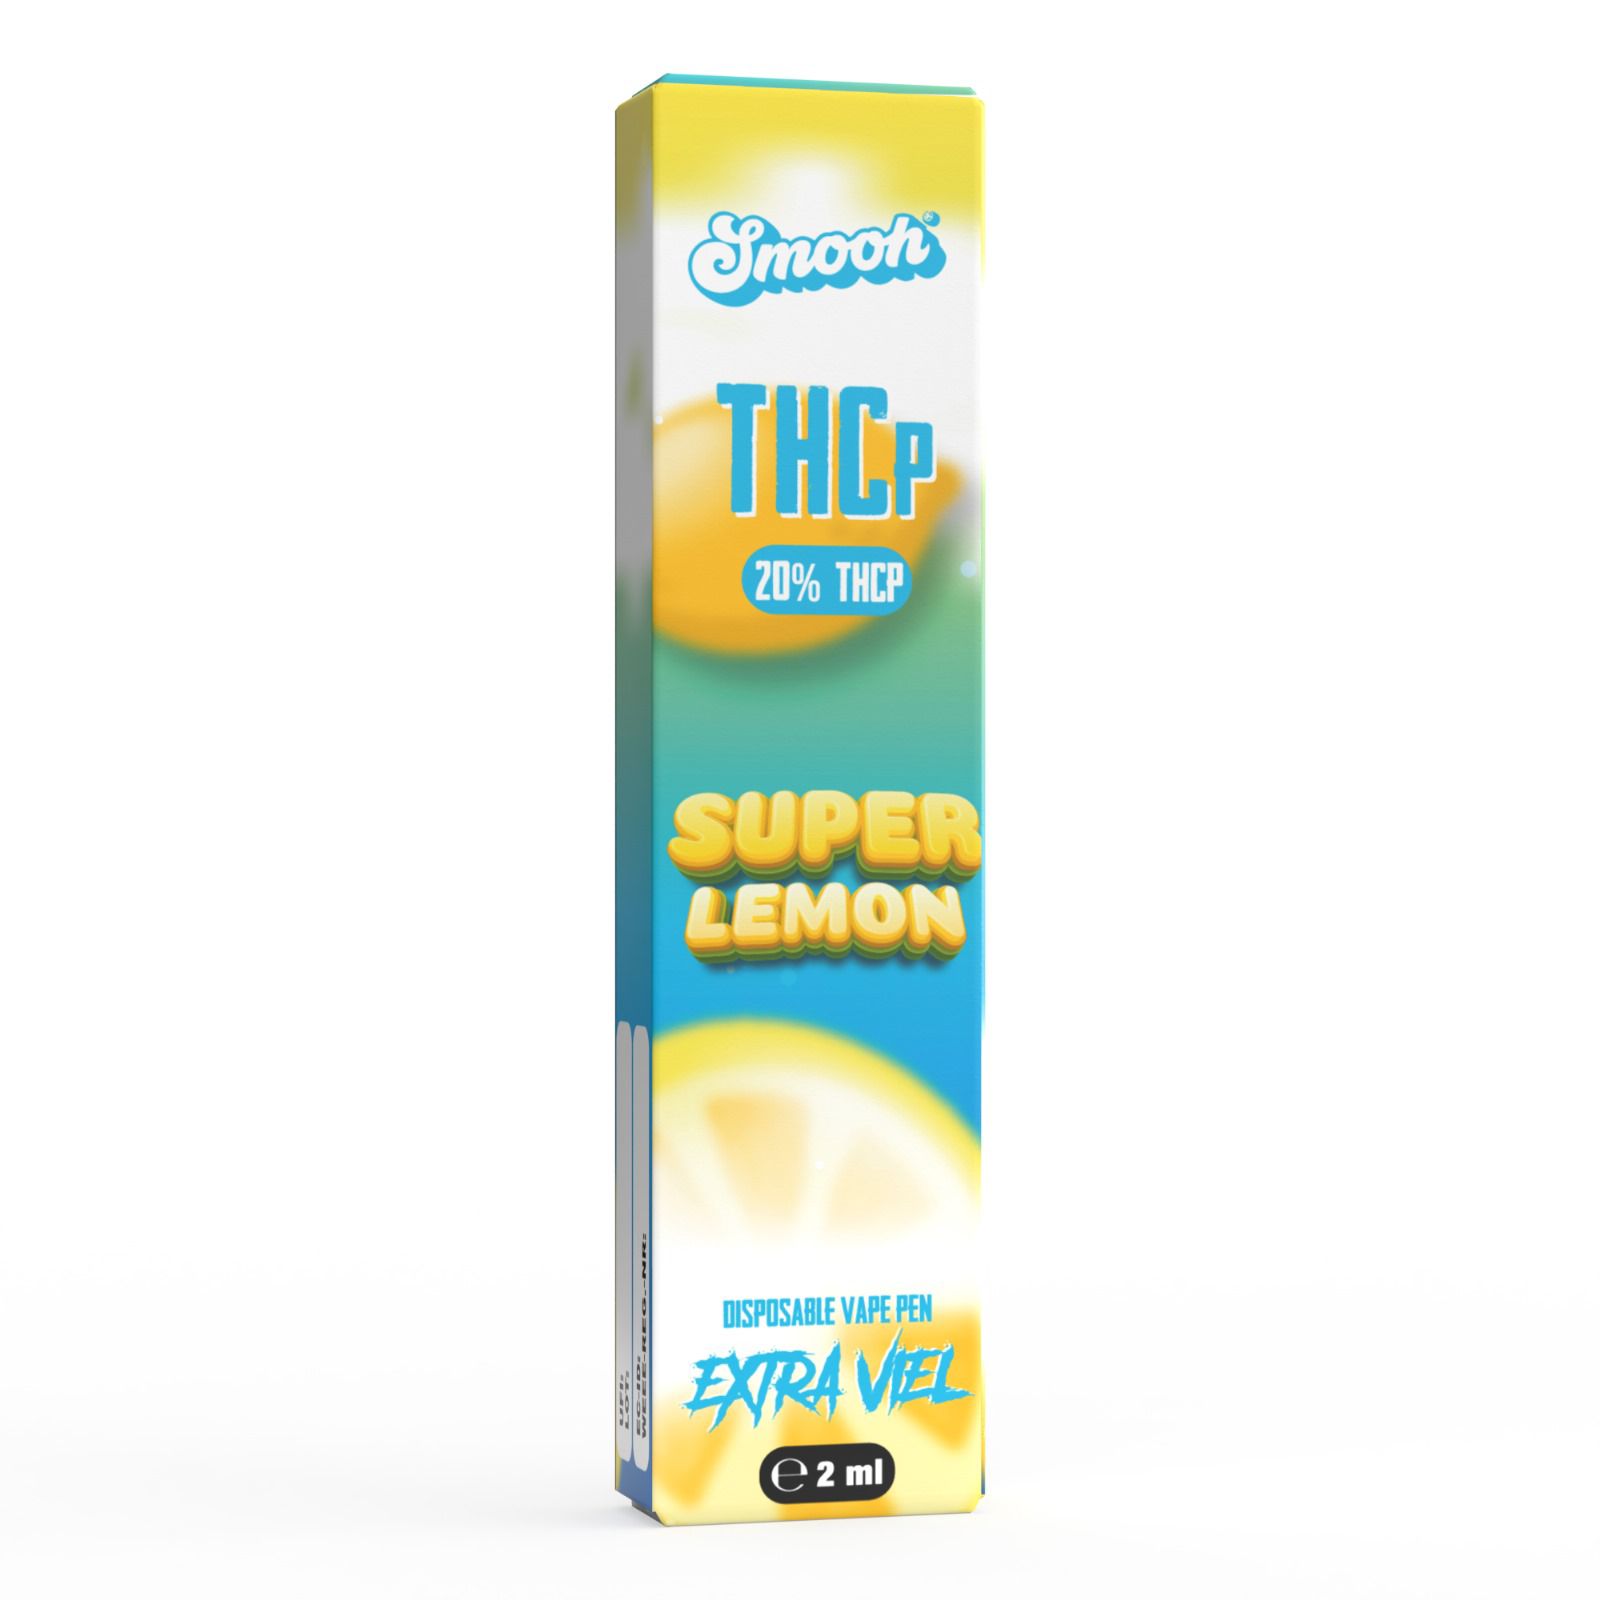 Smooh THC-P Vape - Super Lemon 2ml